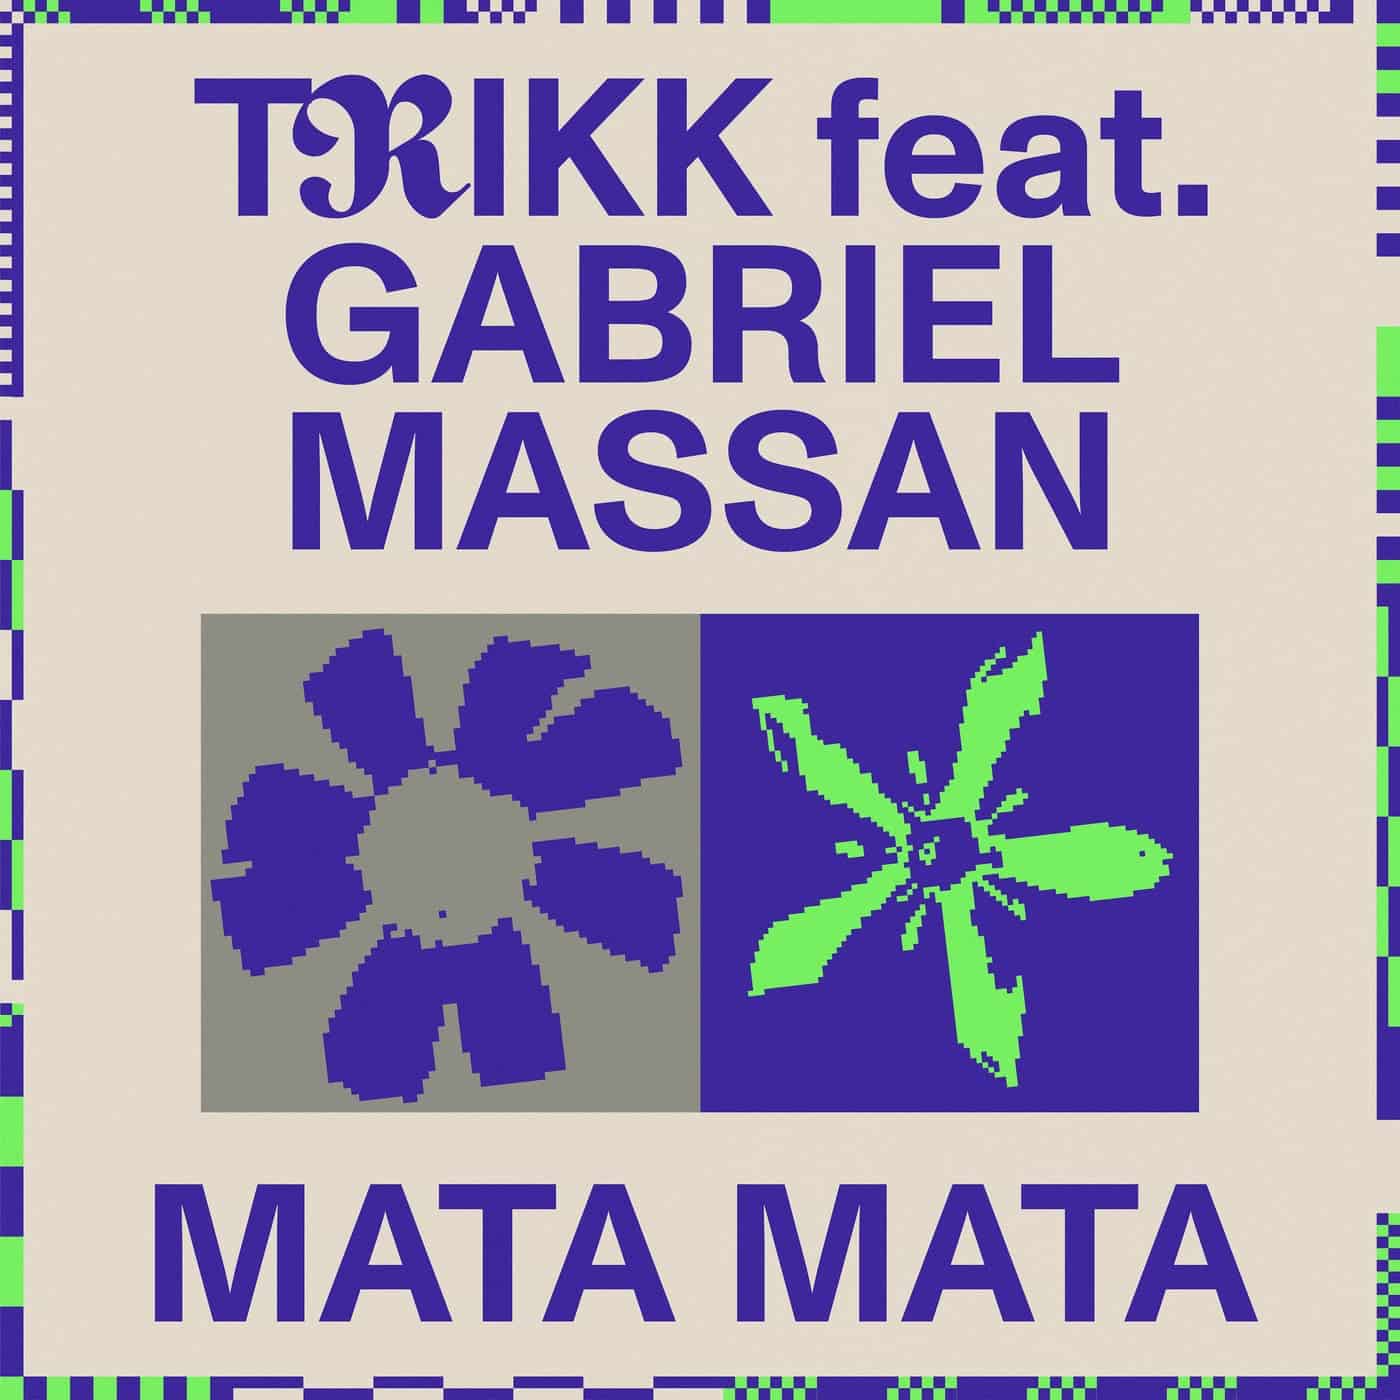 image cover: Trikk, Gabriel Massan - Mata Mata / IVLP12S3DL